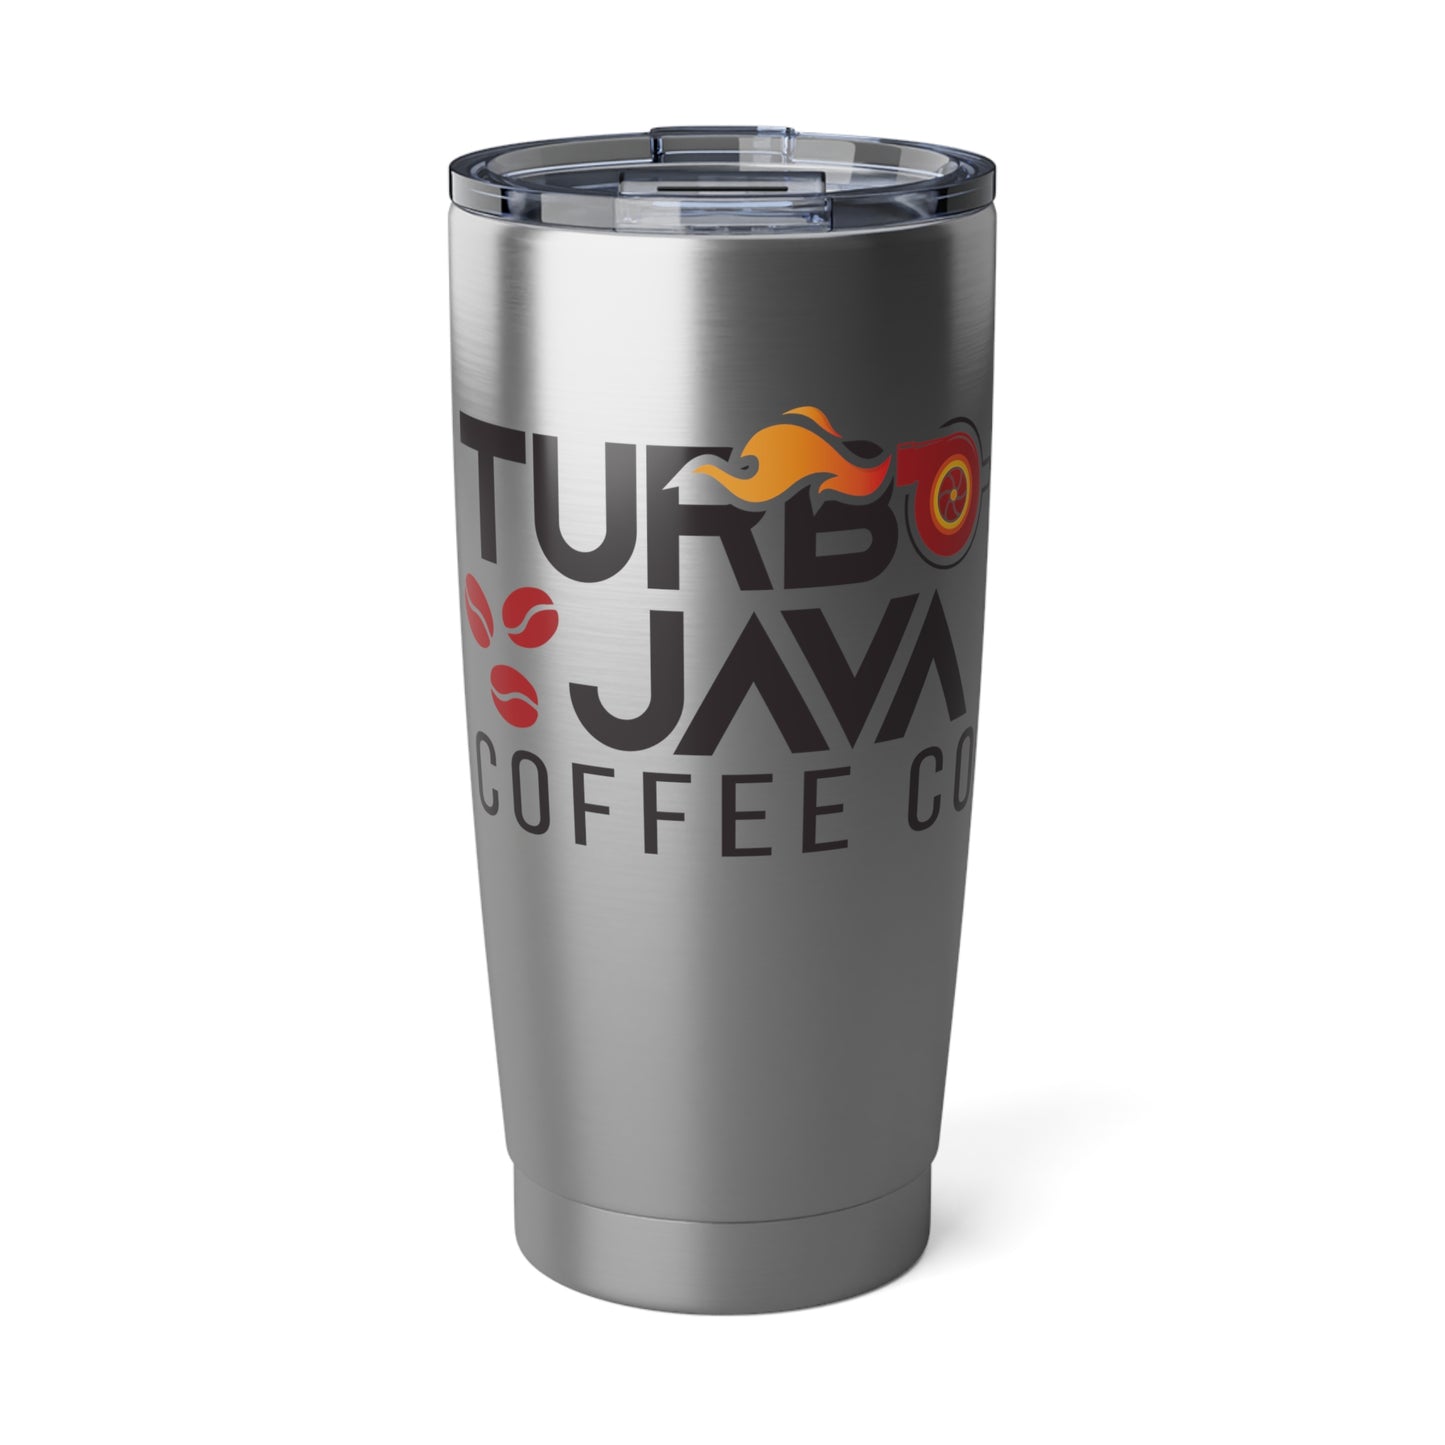 Turbo Java Stainless Steel Travel Tumbler - 20 oz.